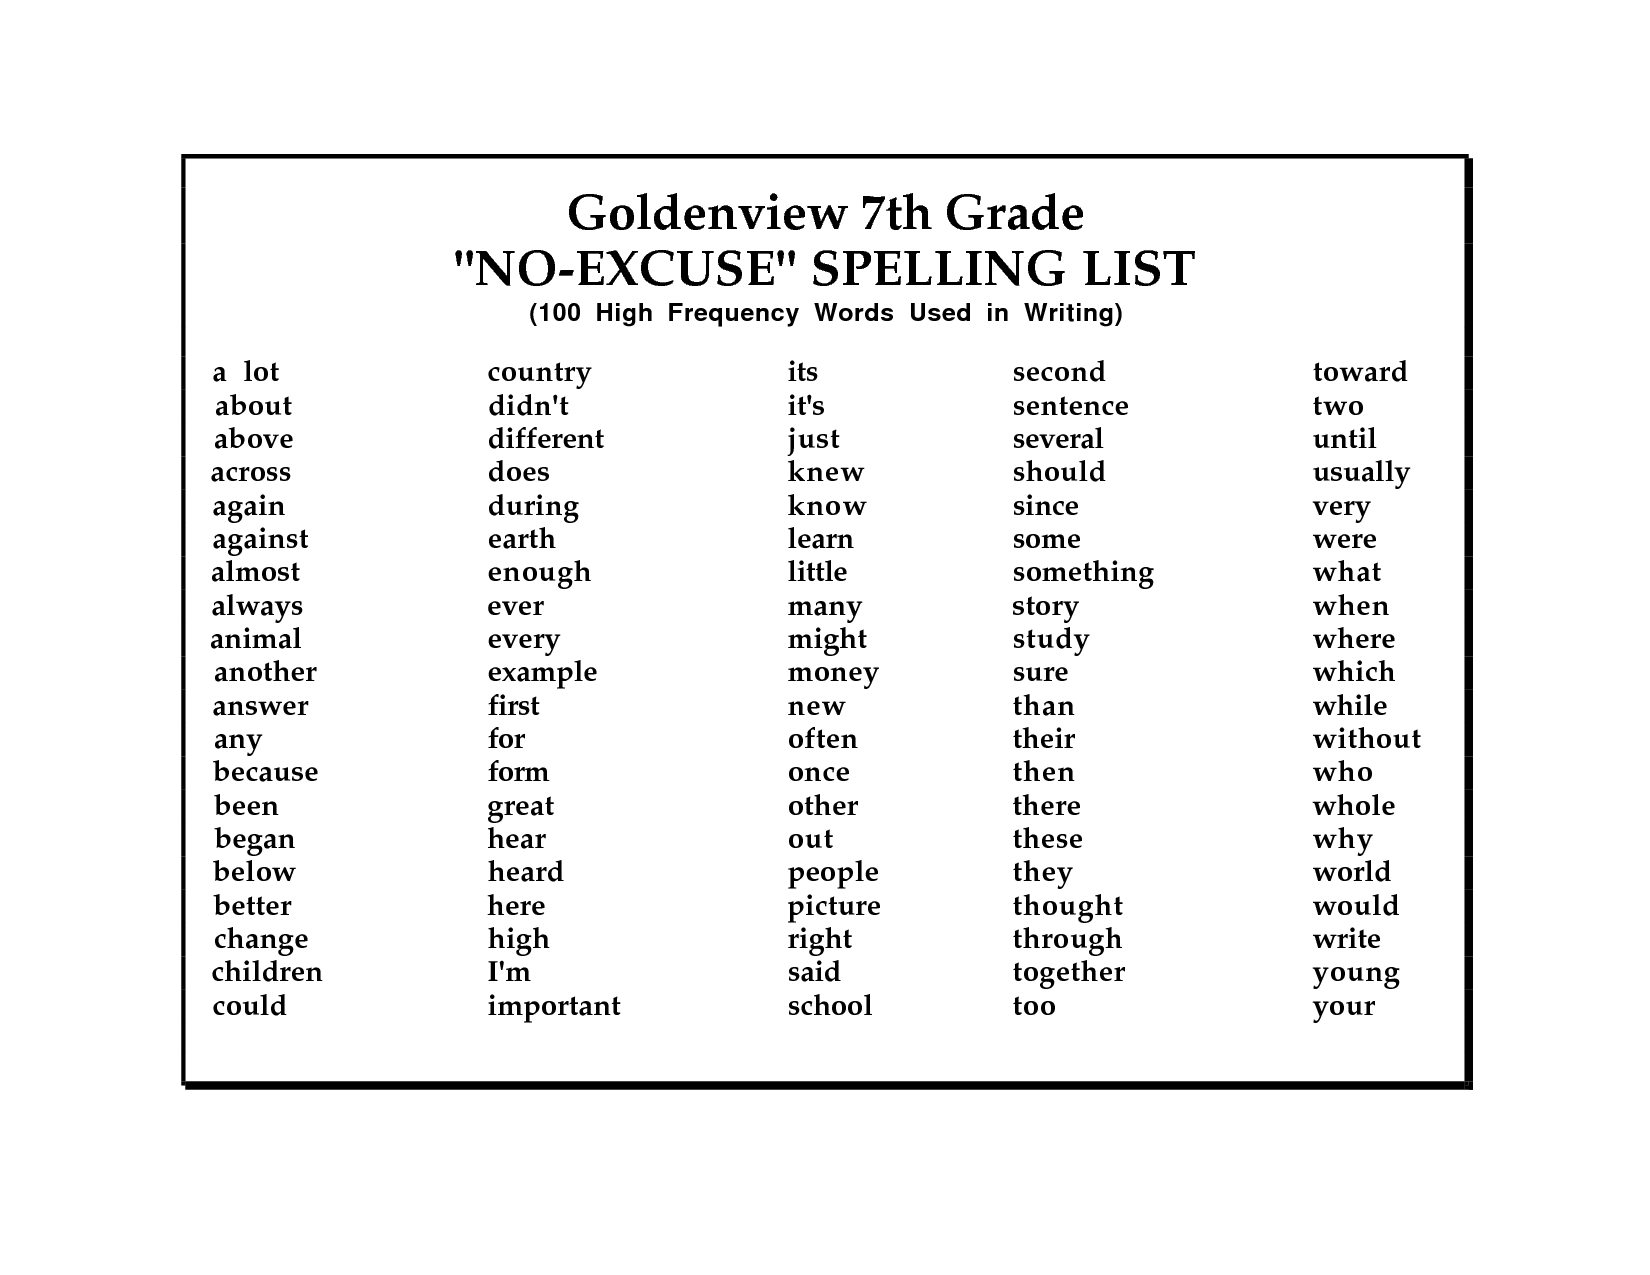 7th Grade Spelling Words Image